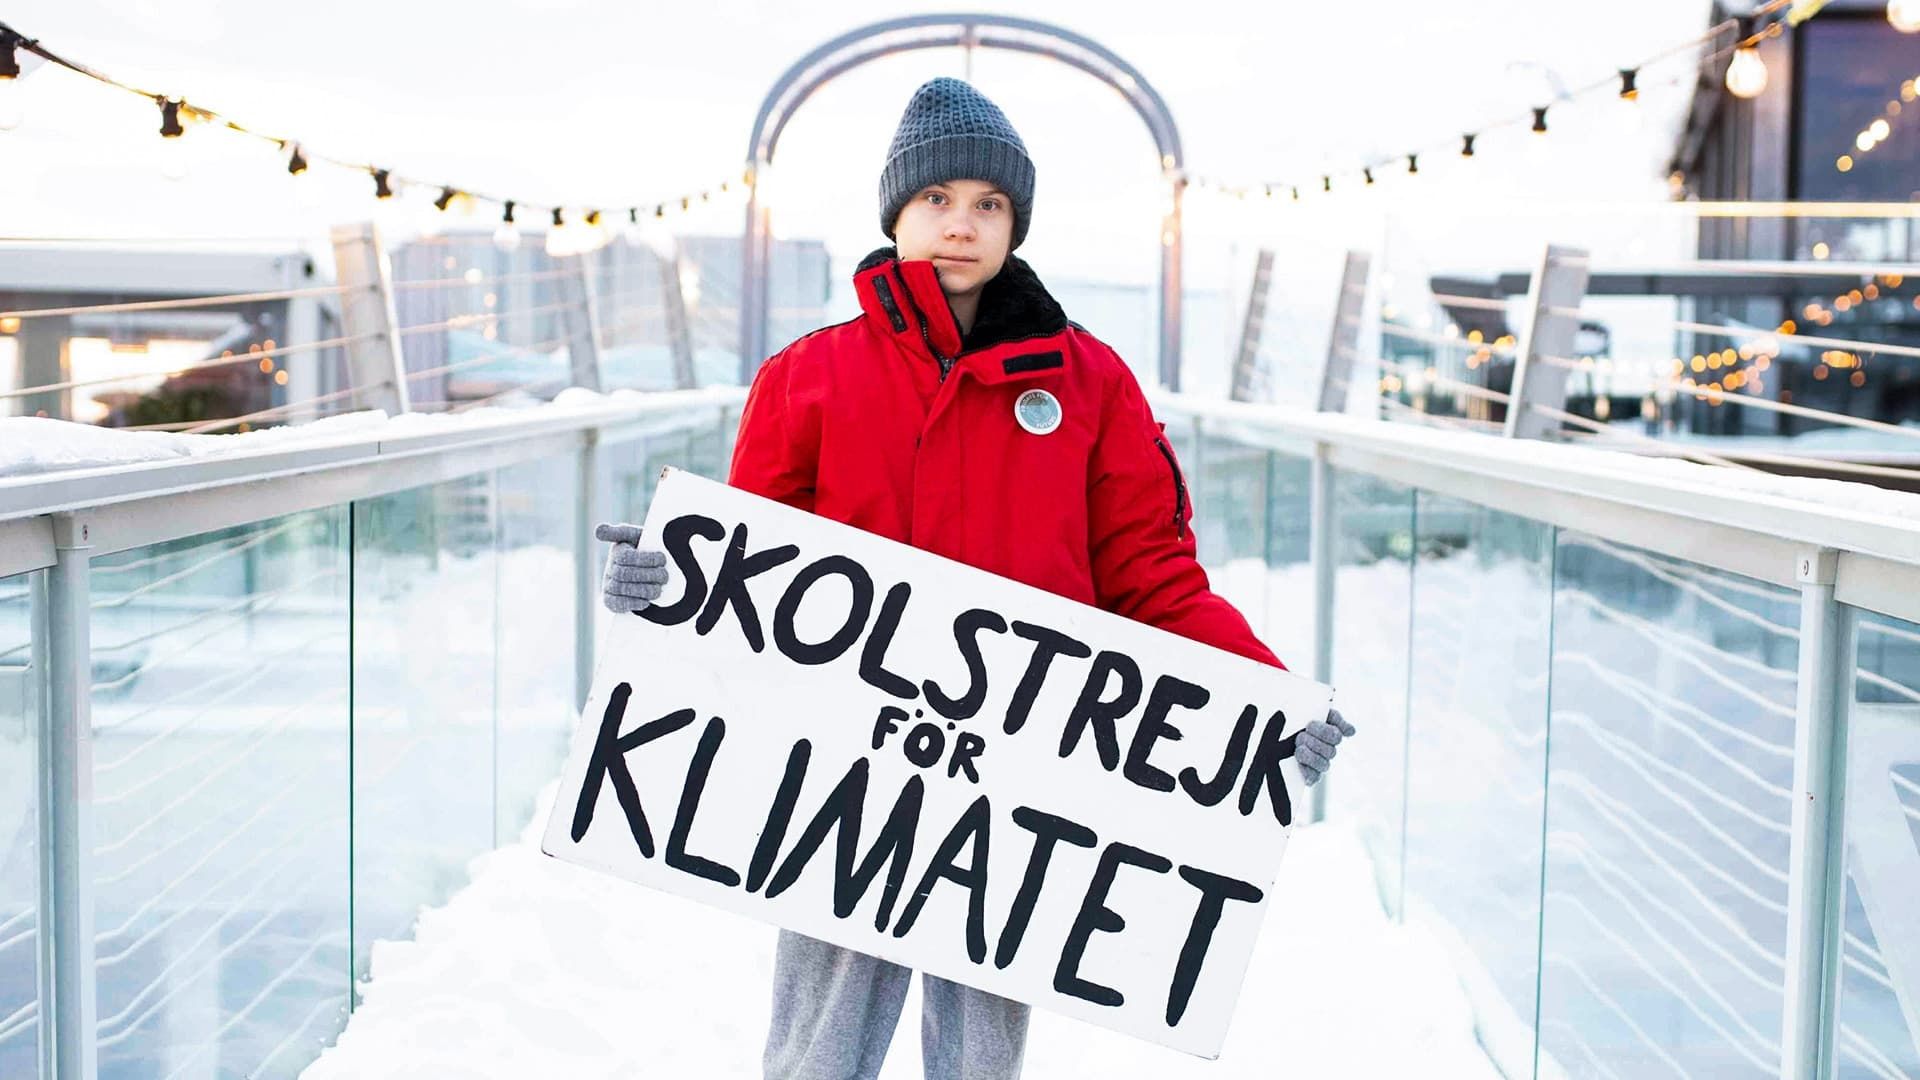 Greta Thunberg: A Year to Change the World background